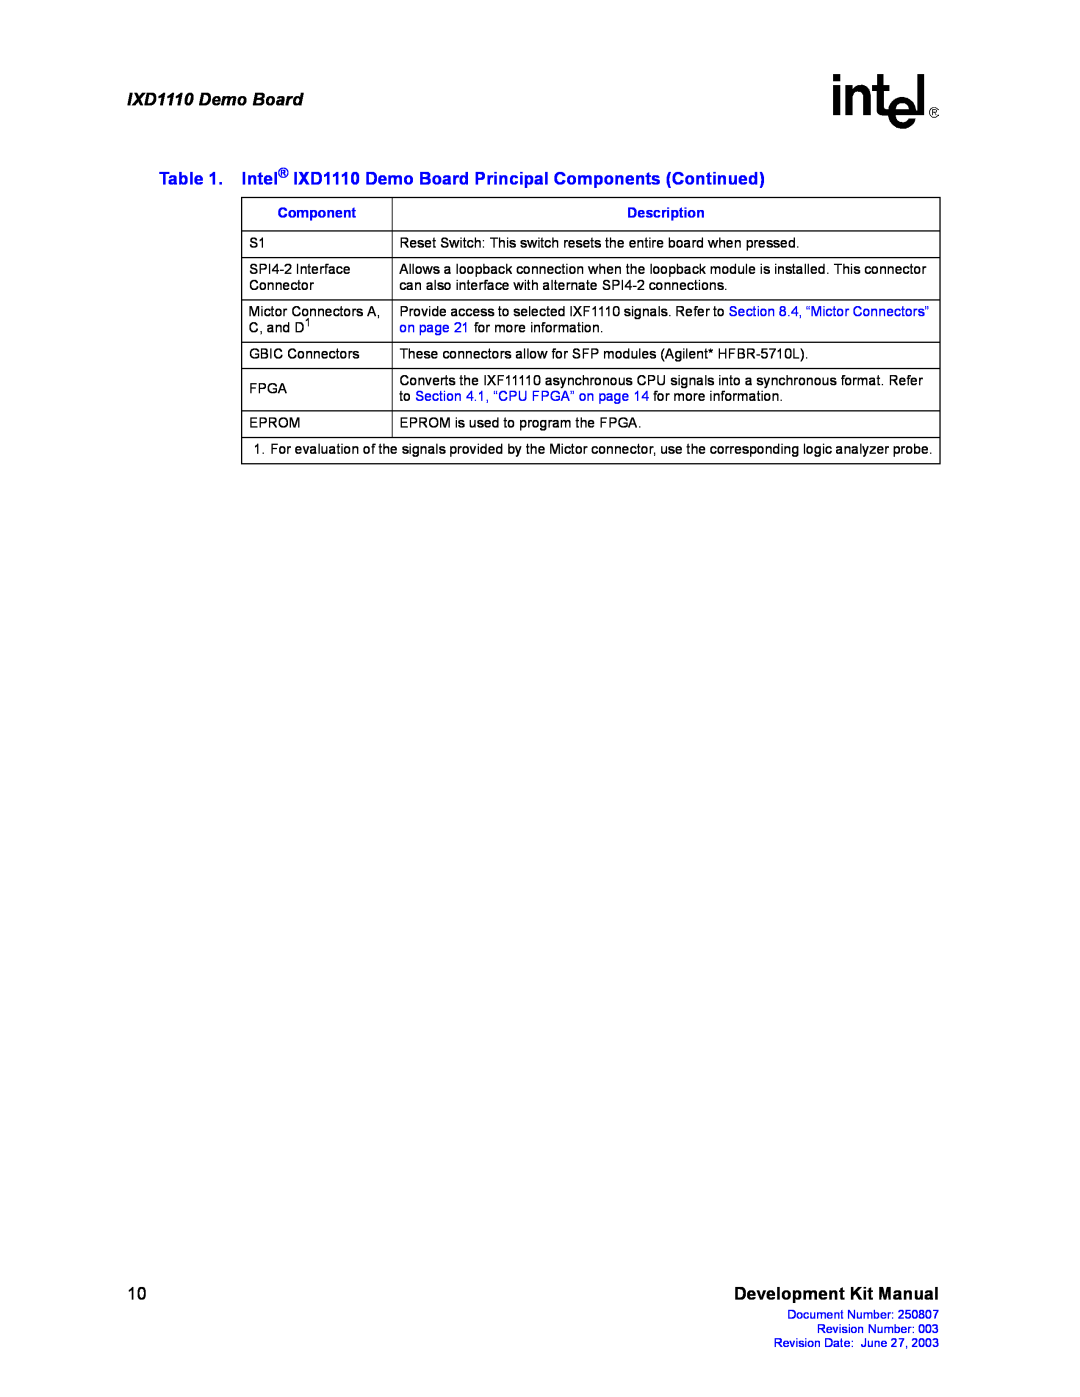 Intel manual Intel IXD1110 Demo Board Principal Components Continued, Development Kit Manual 